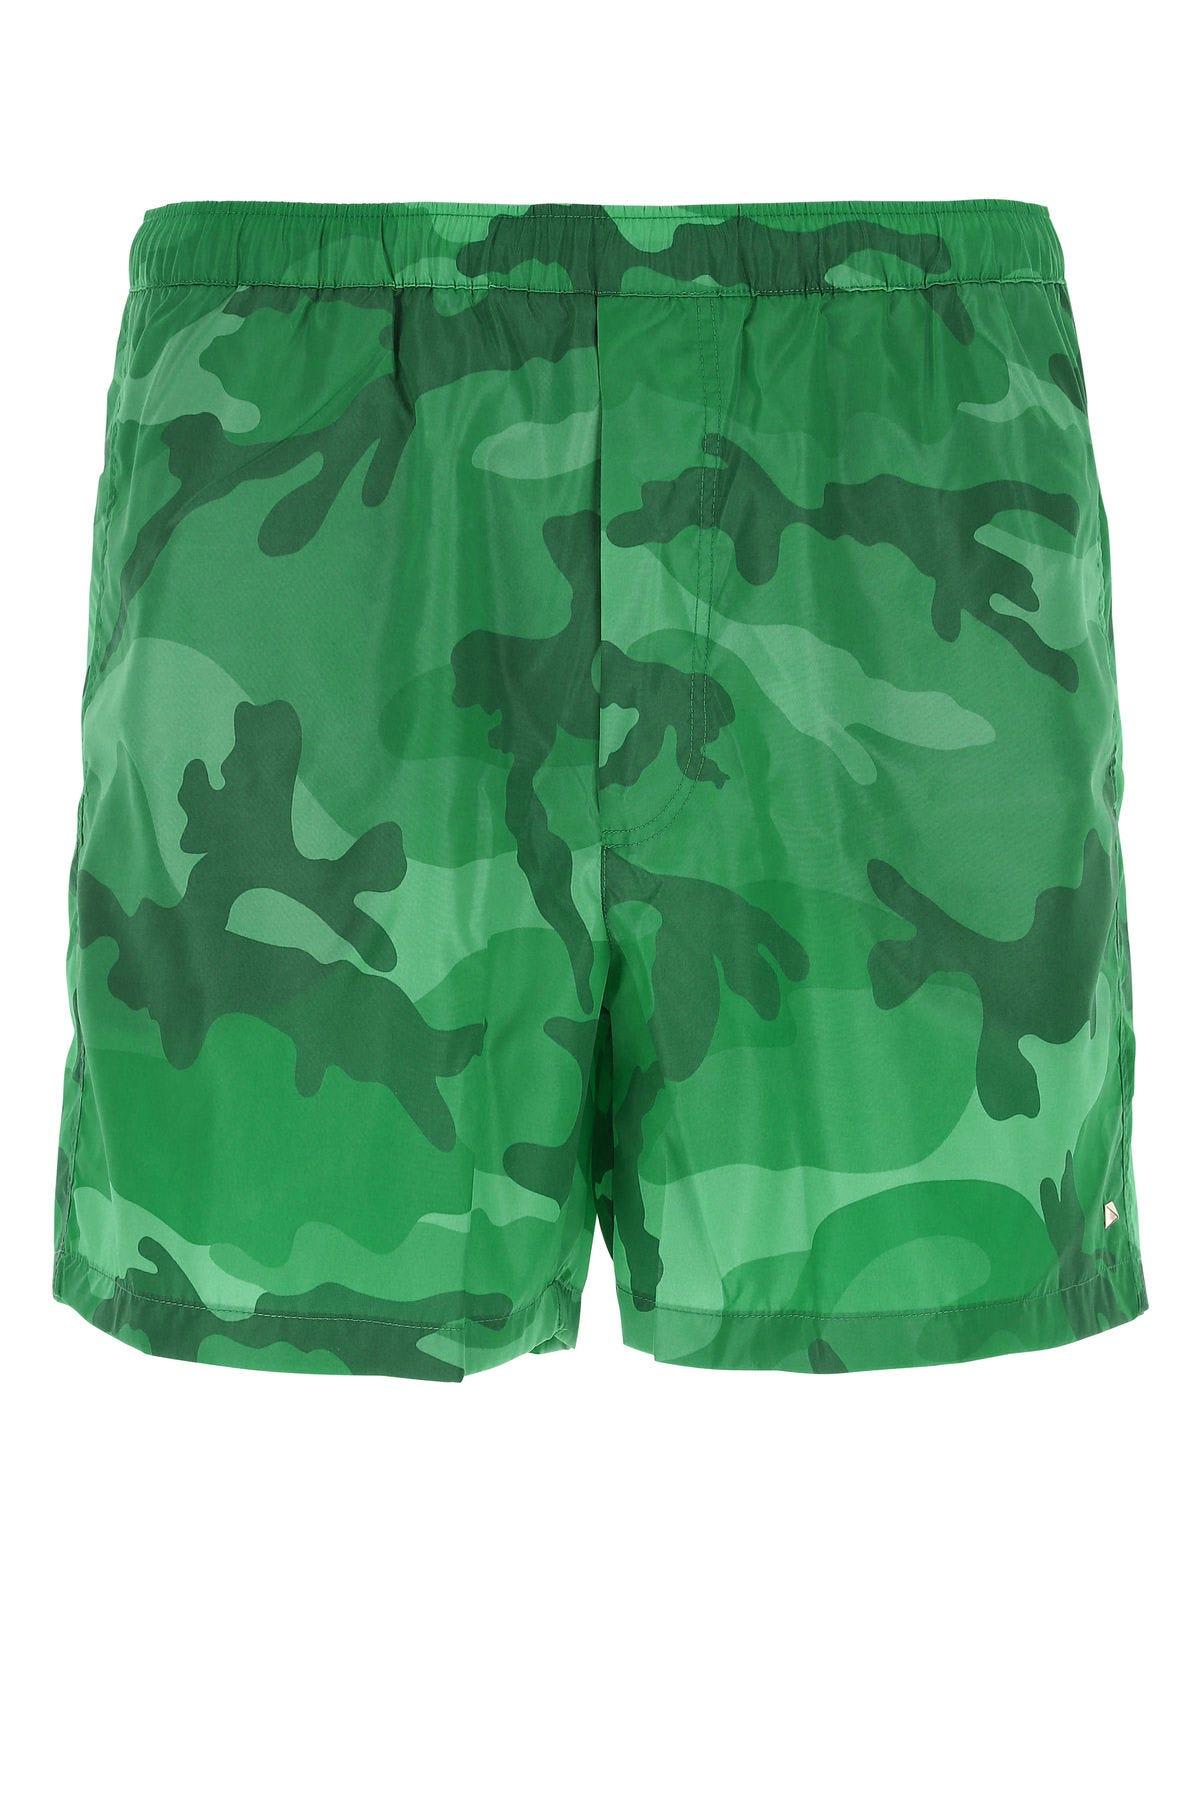 Valentino Printed Nylon Swimming Shorts